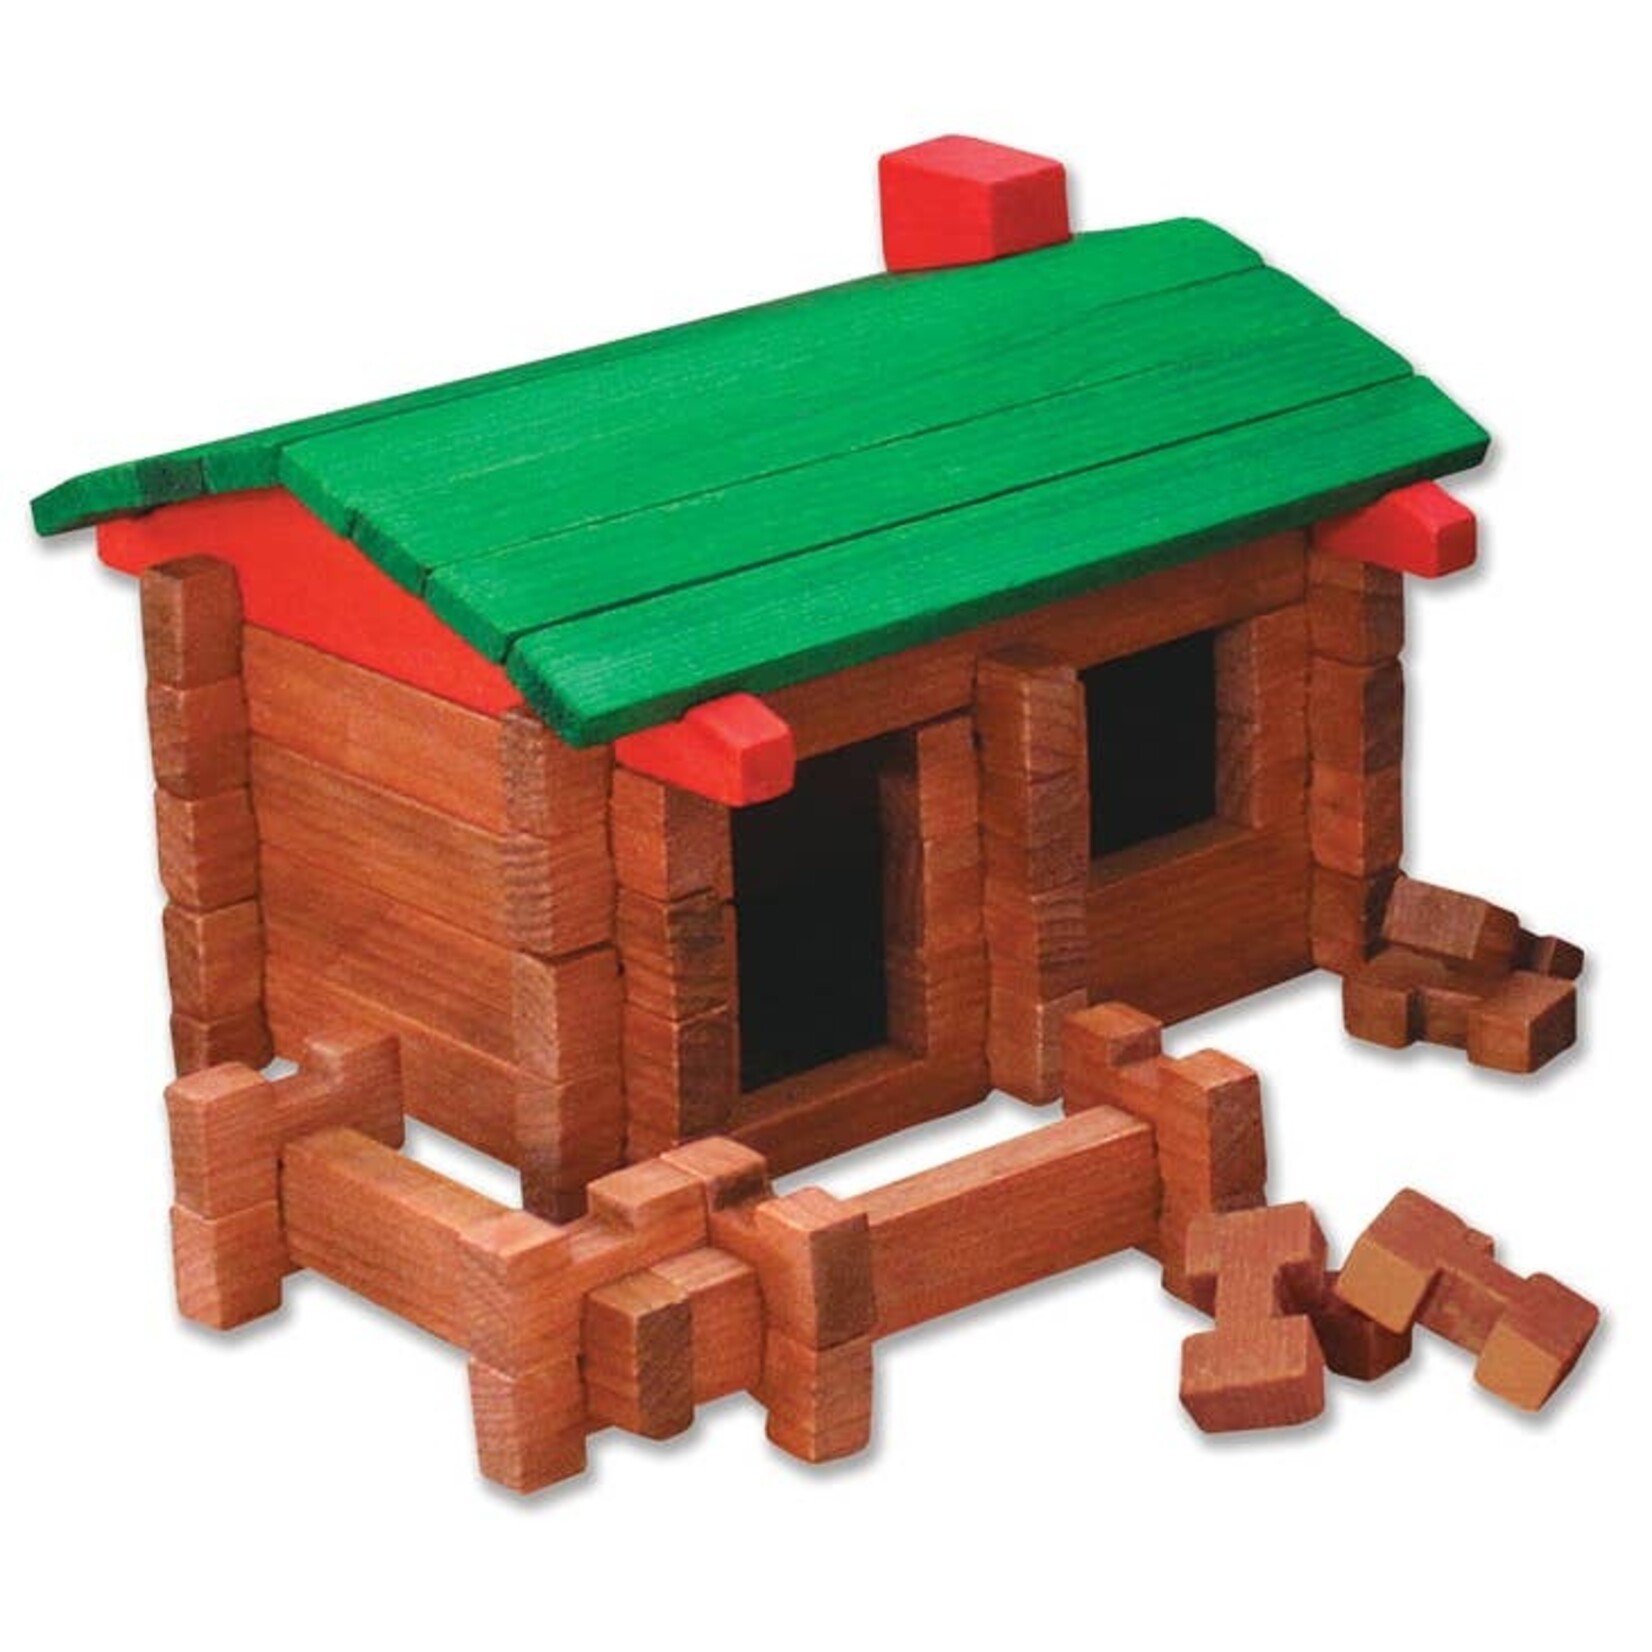 Toys Classic Camp Build Set